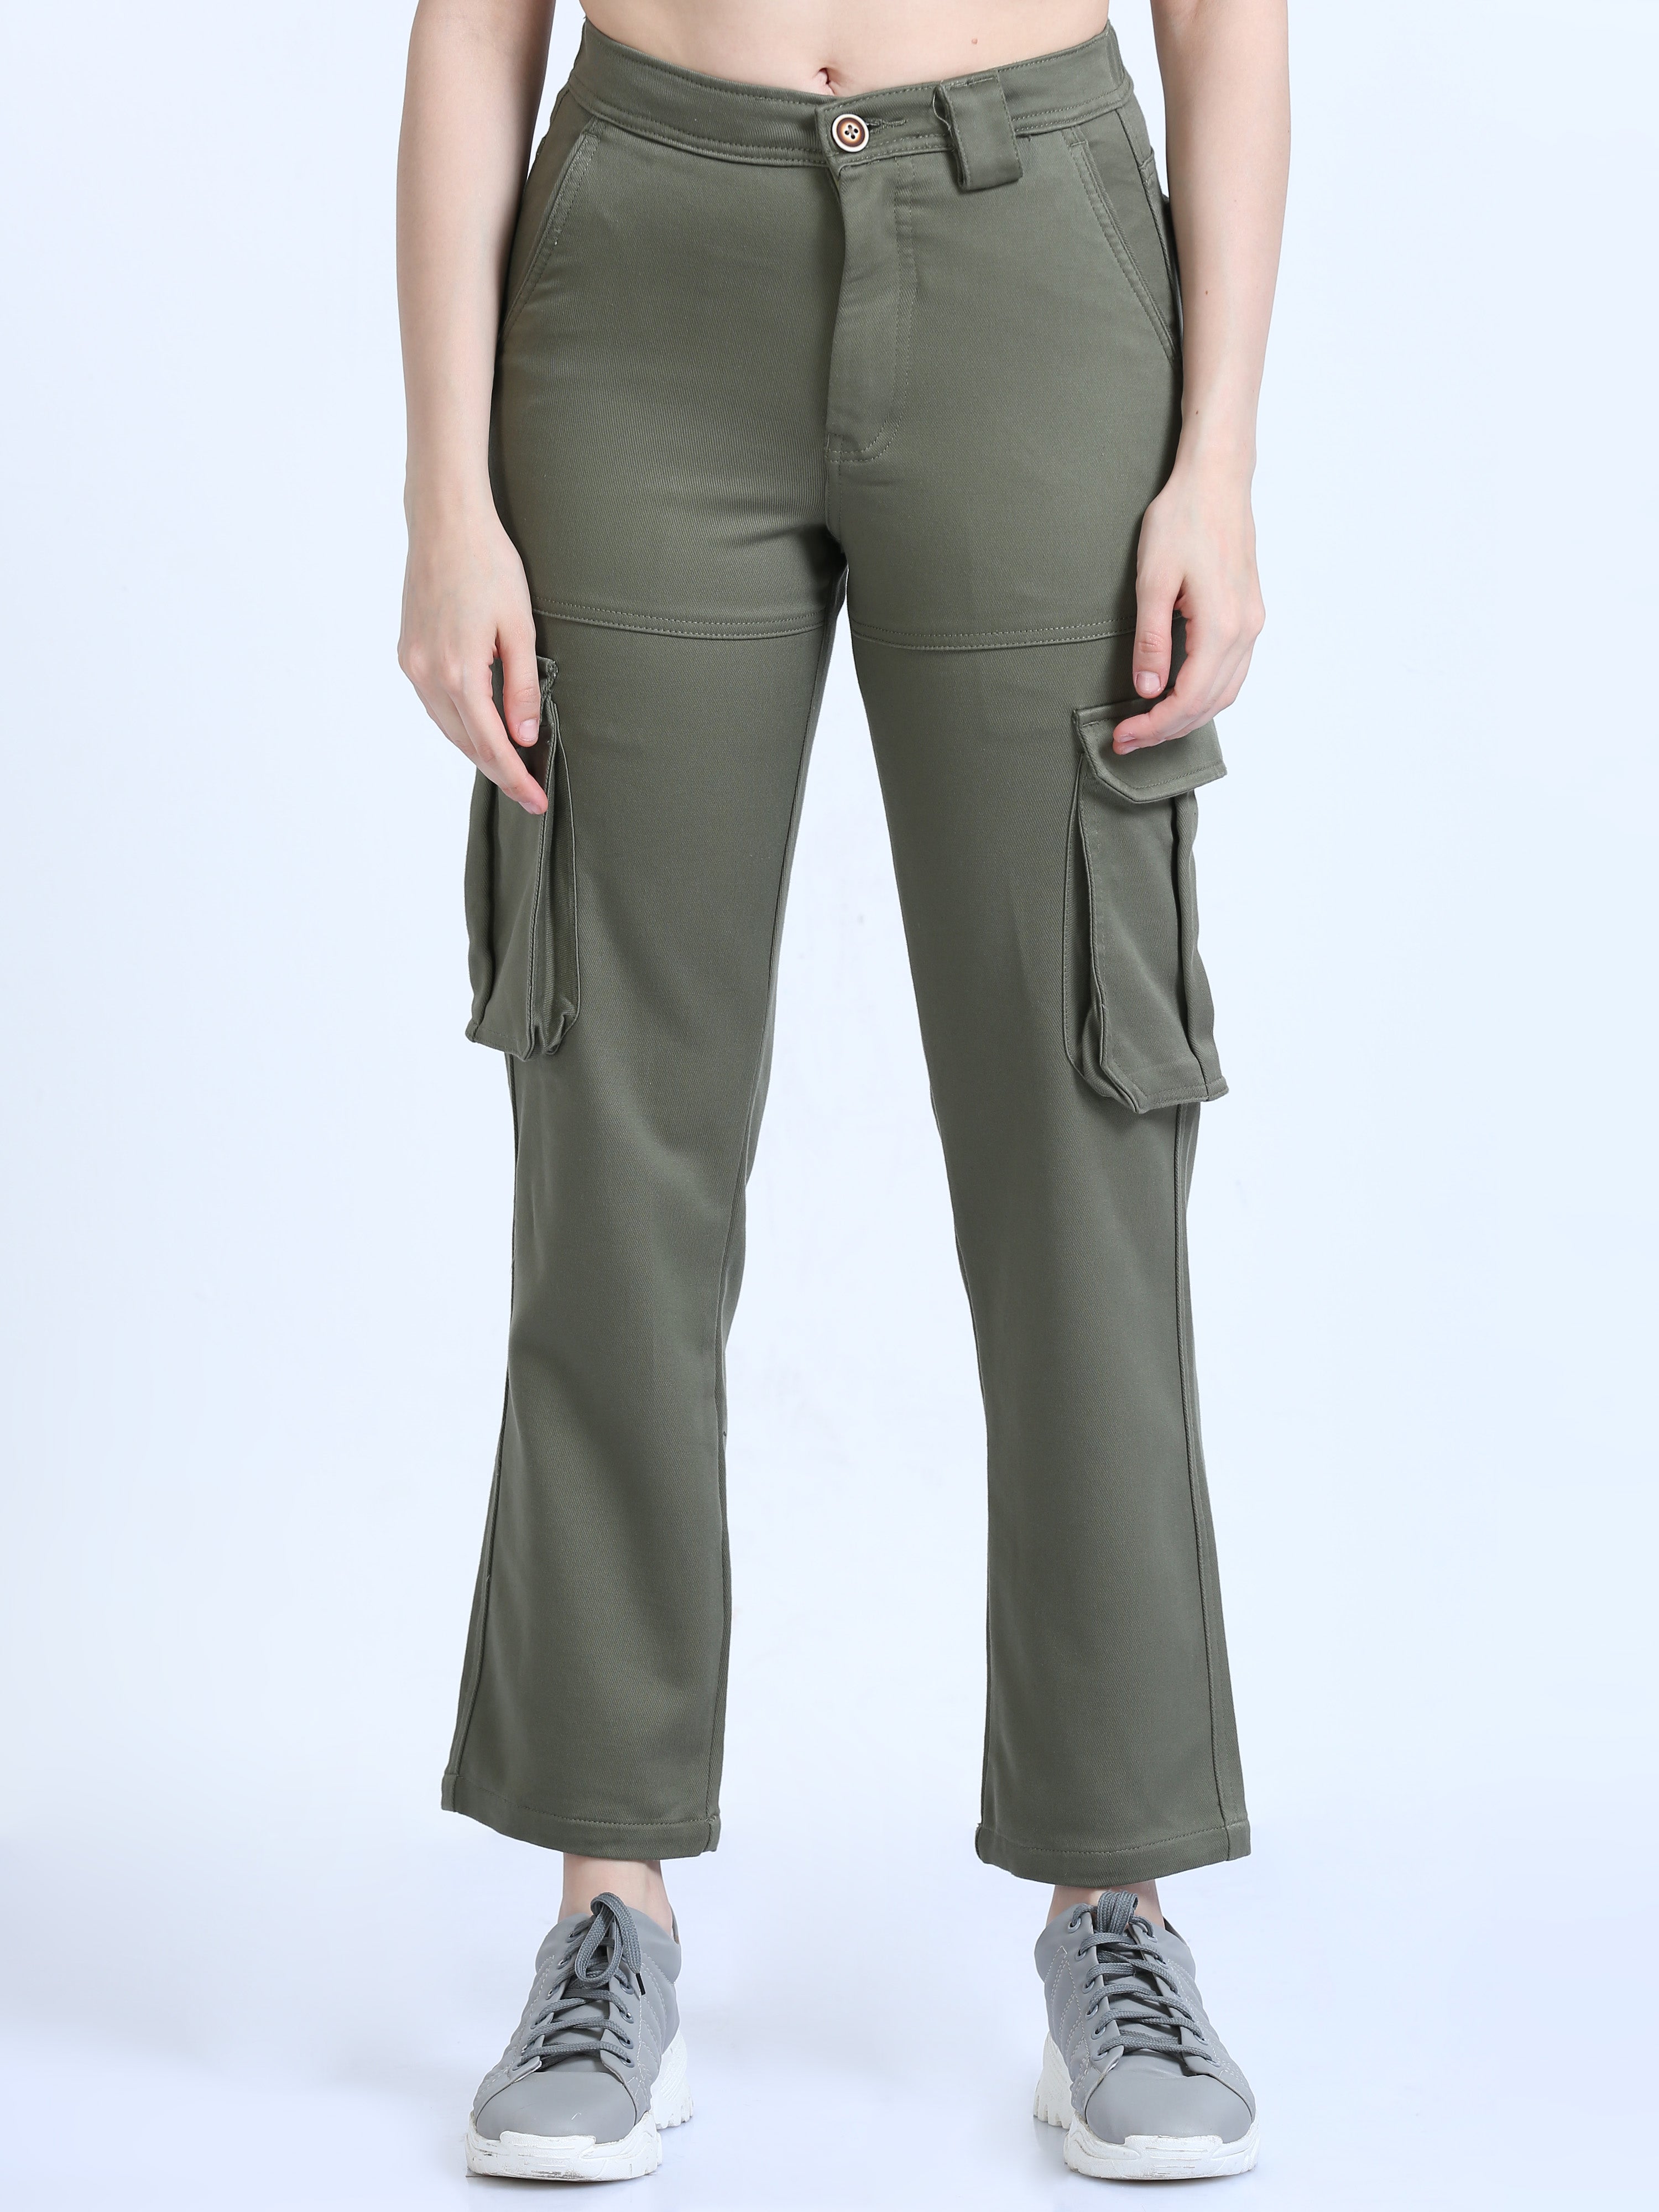 Women's High-rise Cargo Utility Pants - Wild Fable™ Dark Green Xxl : Target